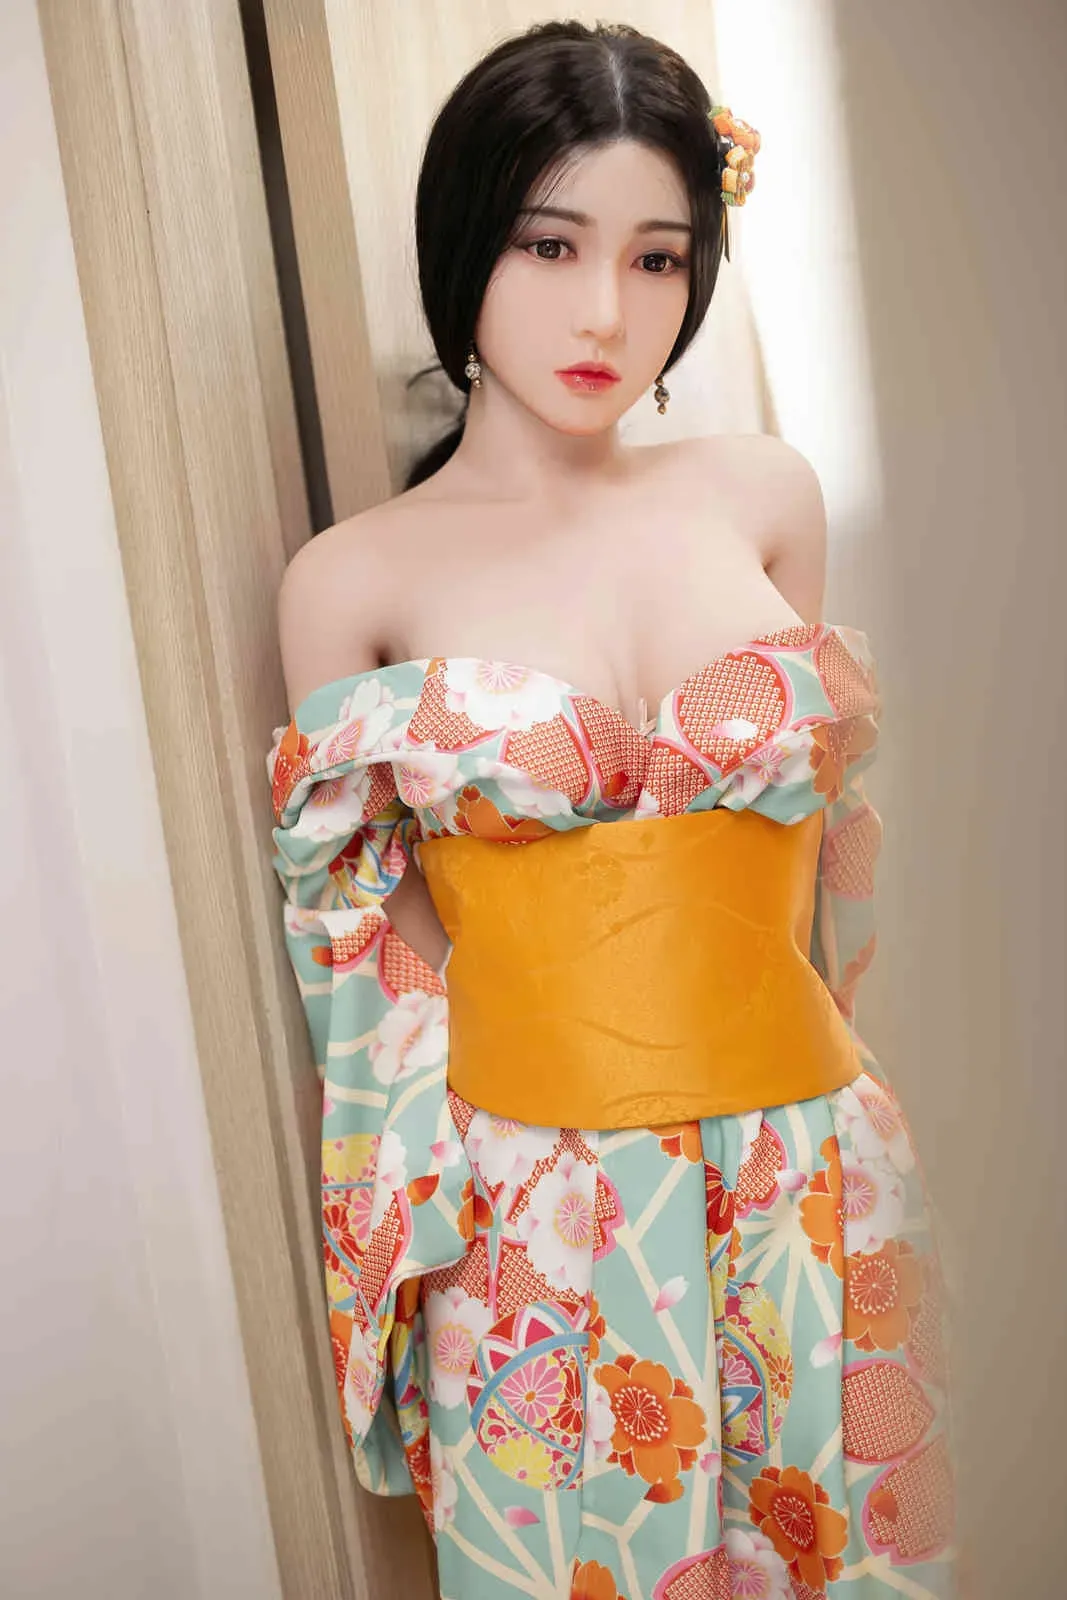 2023 New Full size Silicone Big Breast SexDolls Oral Anal Vagina Japanese Skeleton Adult Mini Lifelike Anime Love Dolls for Men